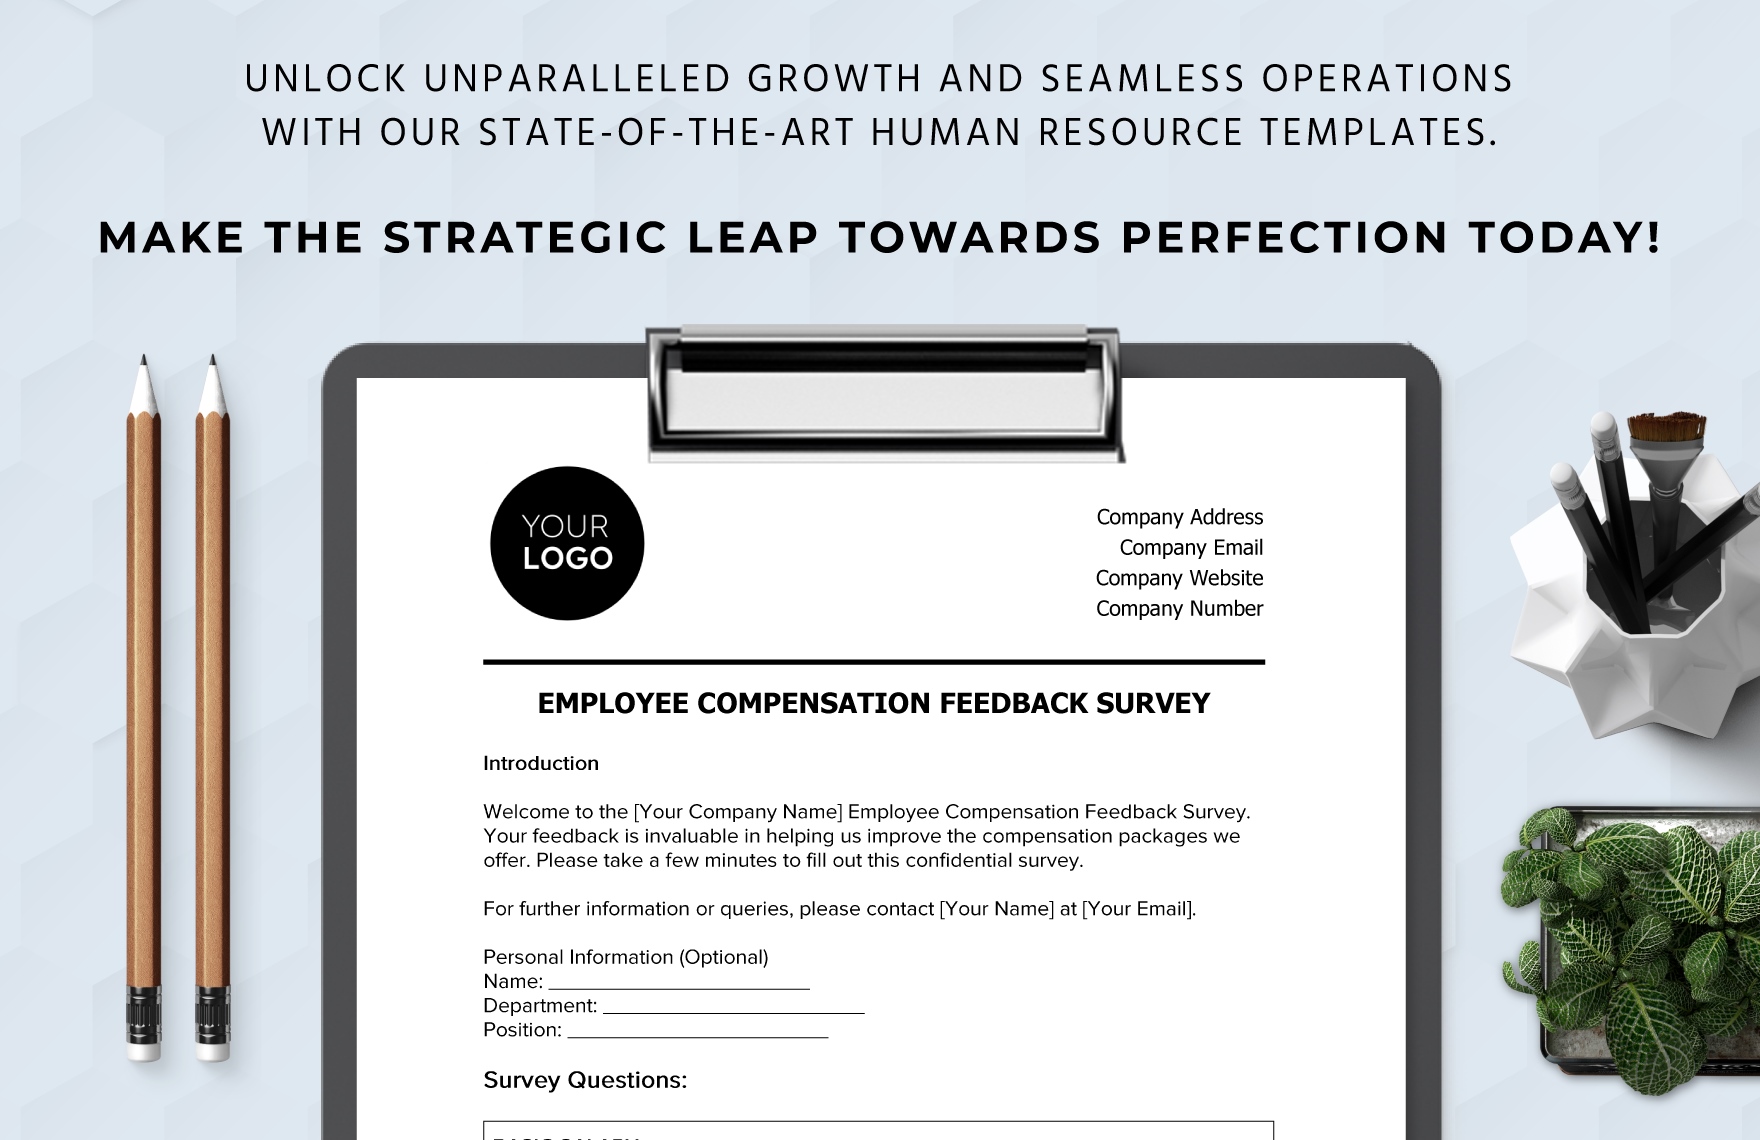 Employee Compensation Feedback Survey HR Template